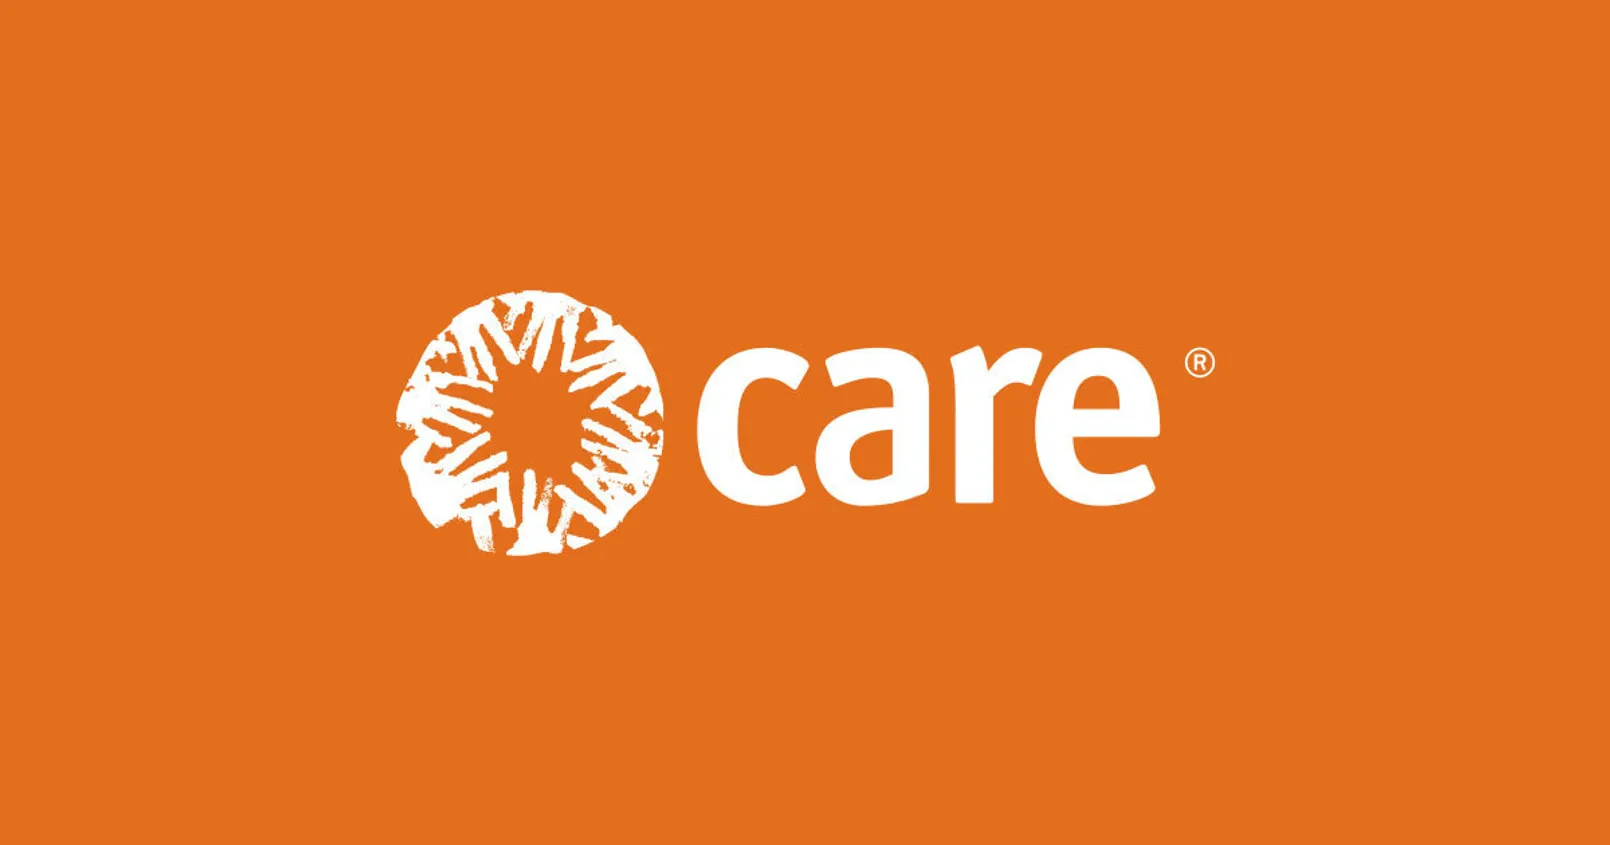 Care Logo Featured Image.jpg